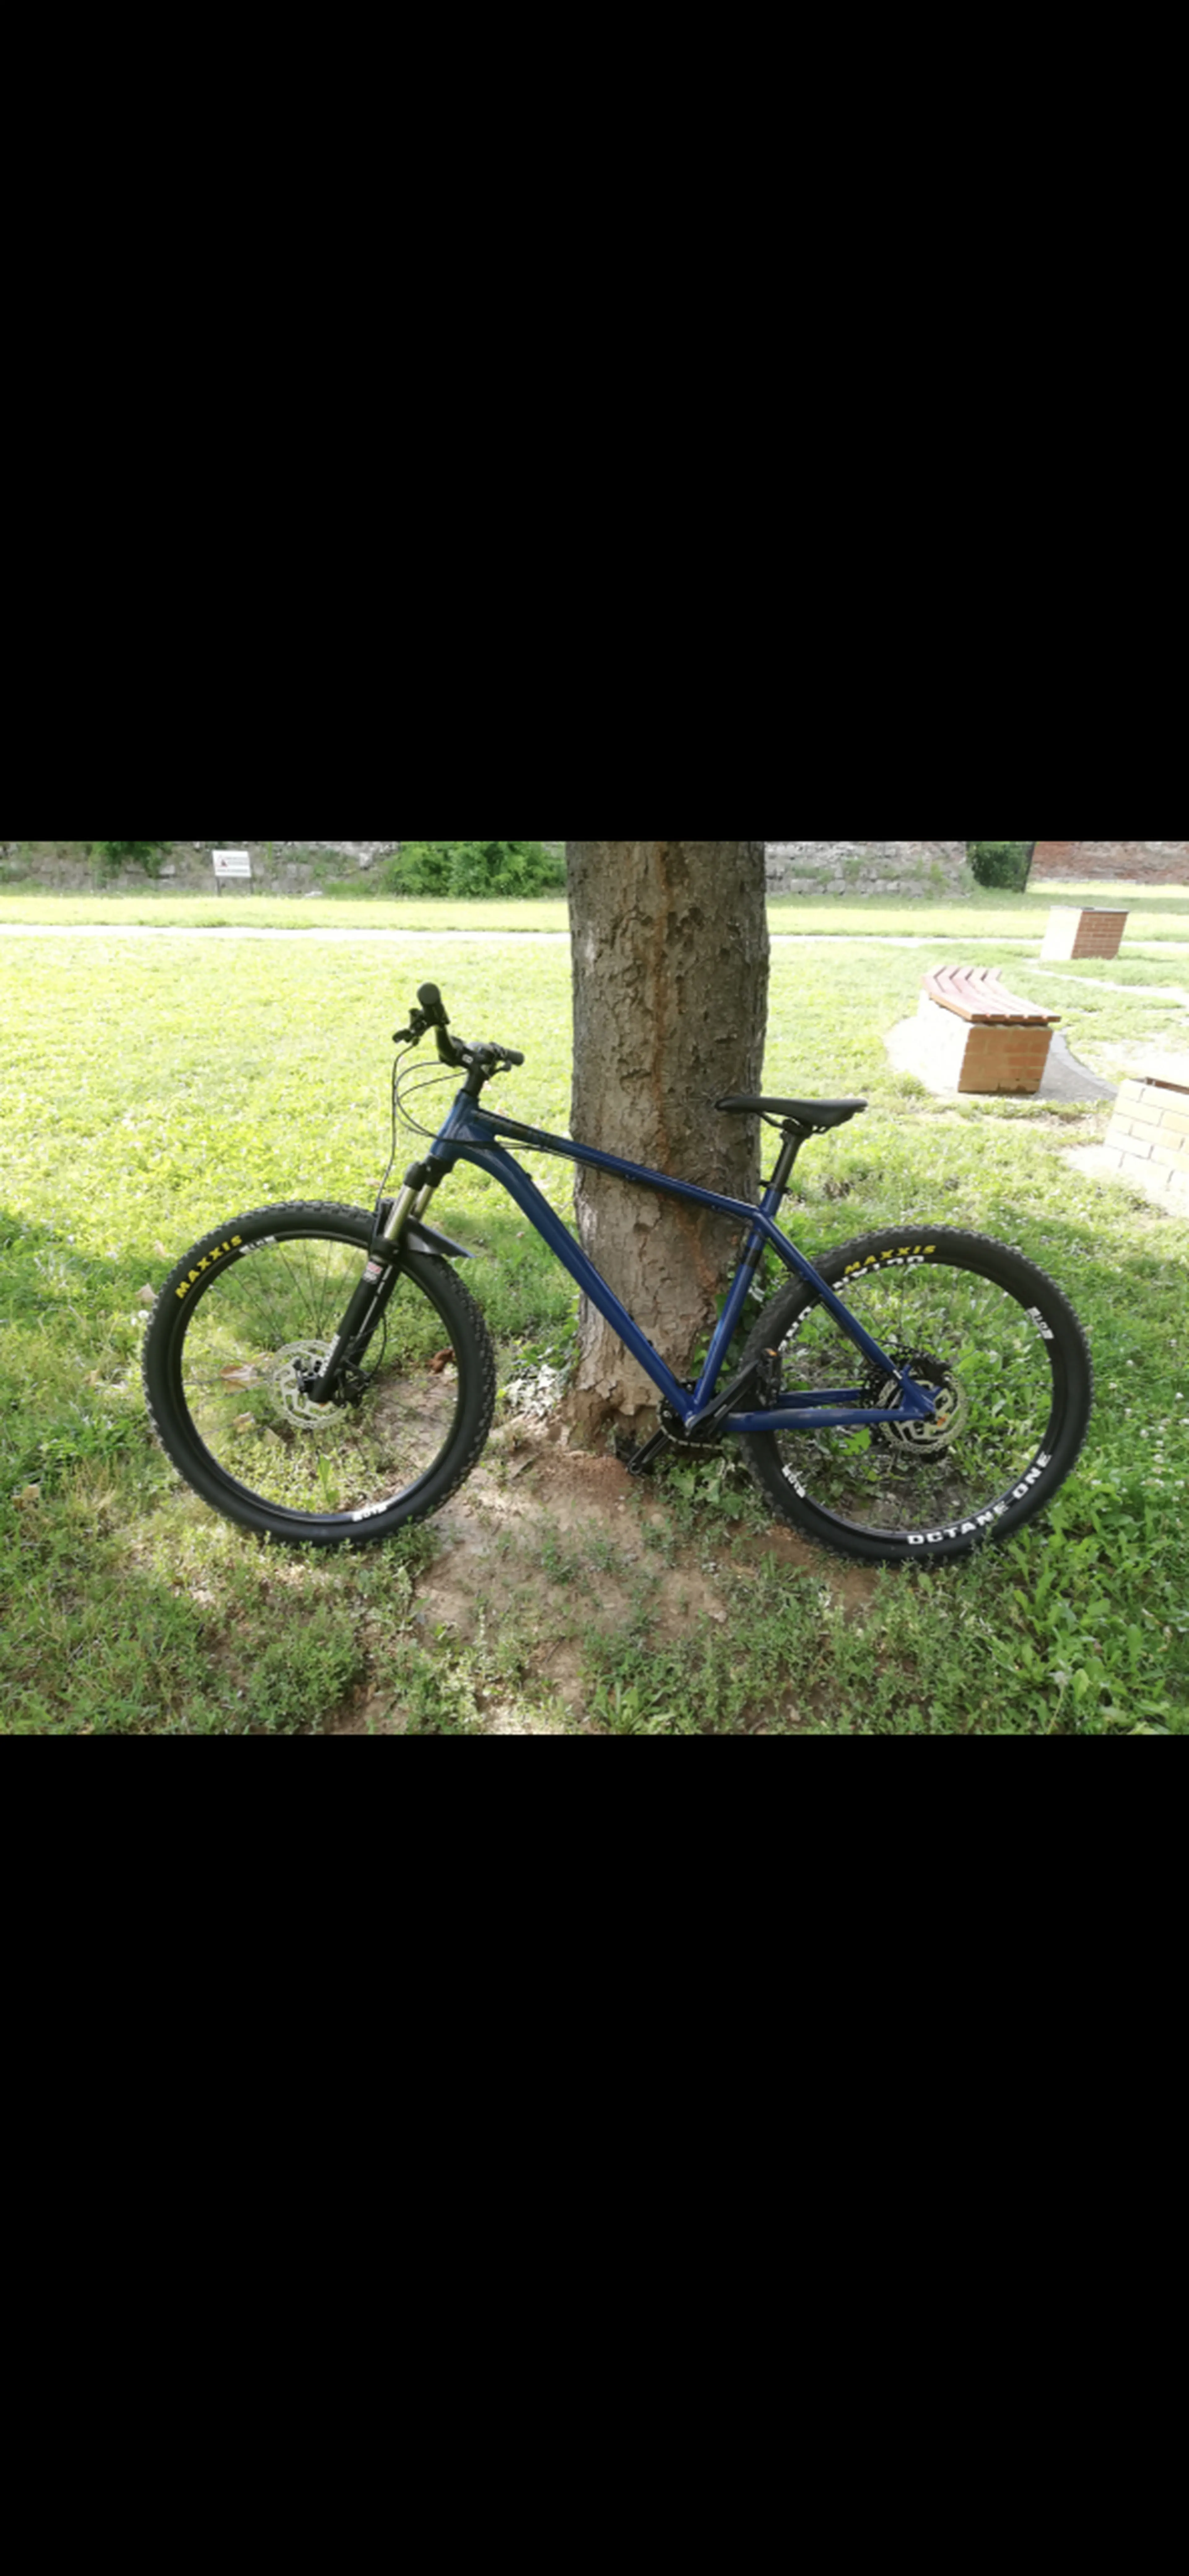 3. Bicicletä mountainbike hardtail enduro 27.5" 1x12 shimano egale nx